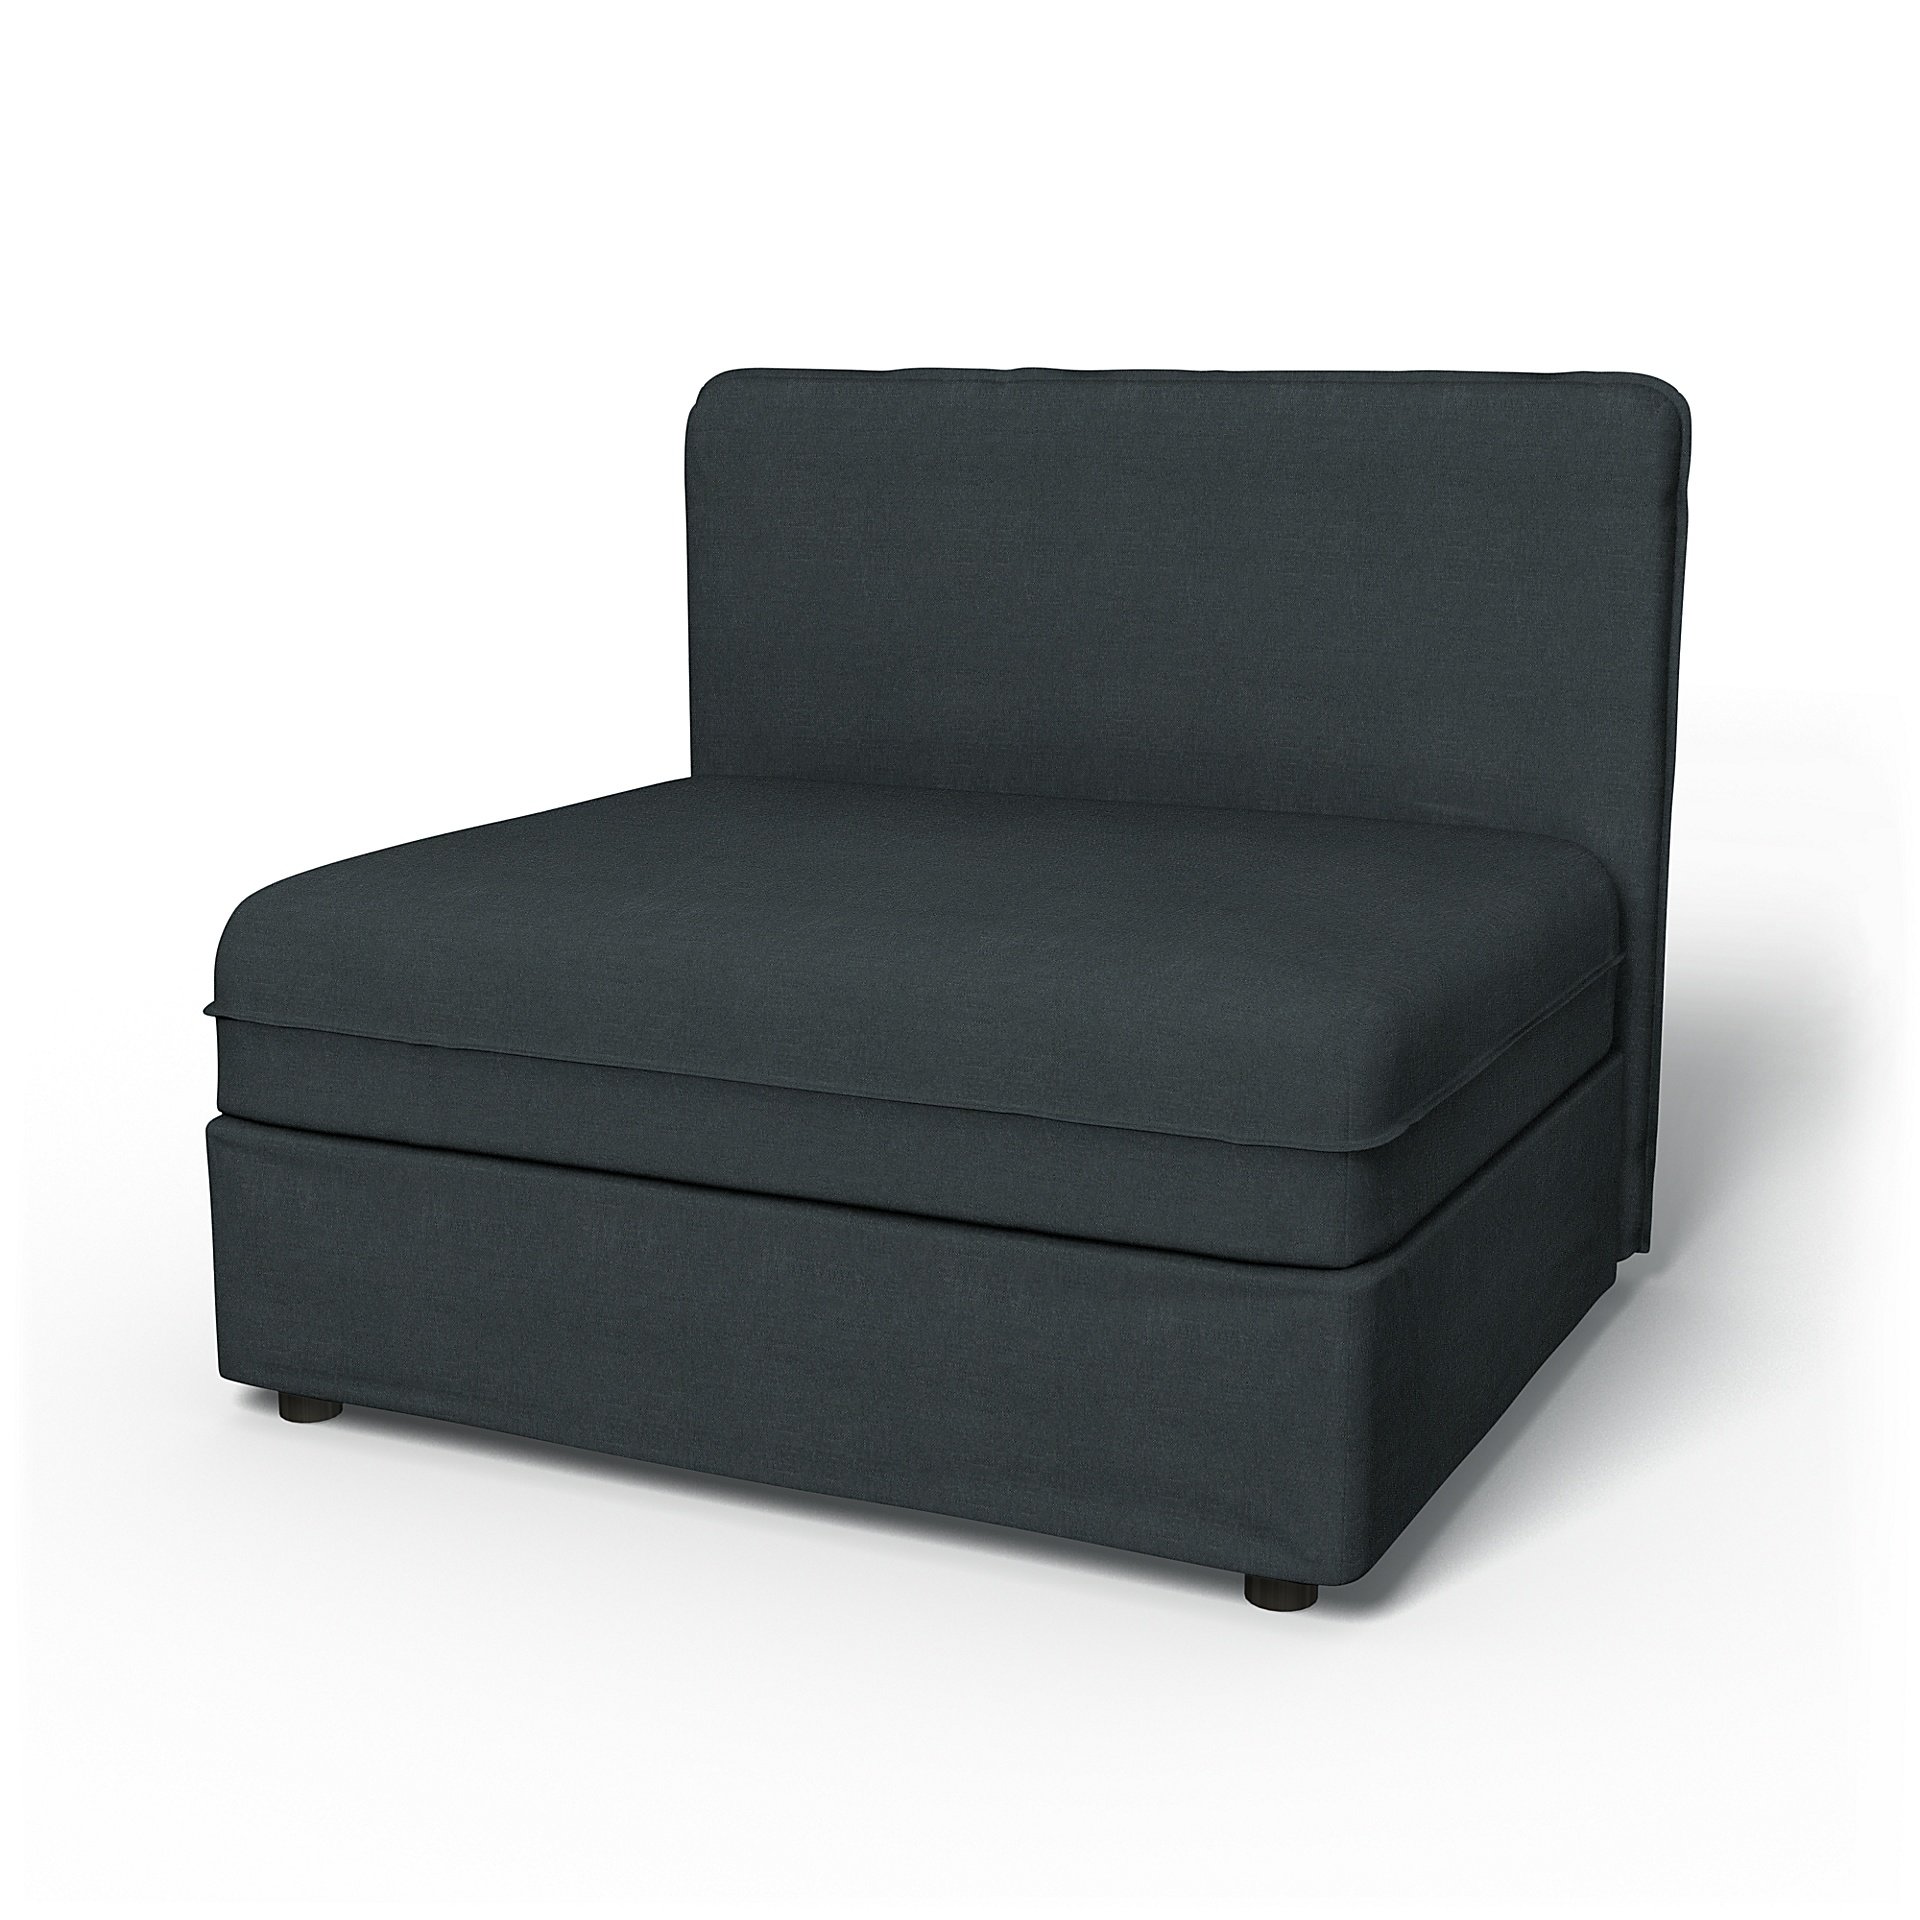 IKEA - Vallentuna Seat Module with Low Back Cover 100x80cm 39x32in, Graphite Grey, Linen - Bemz